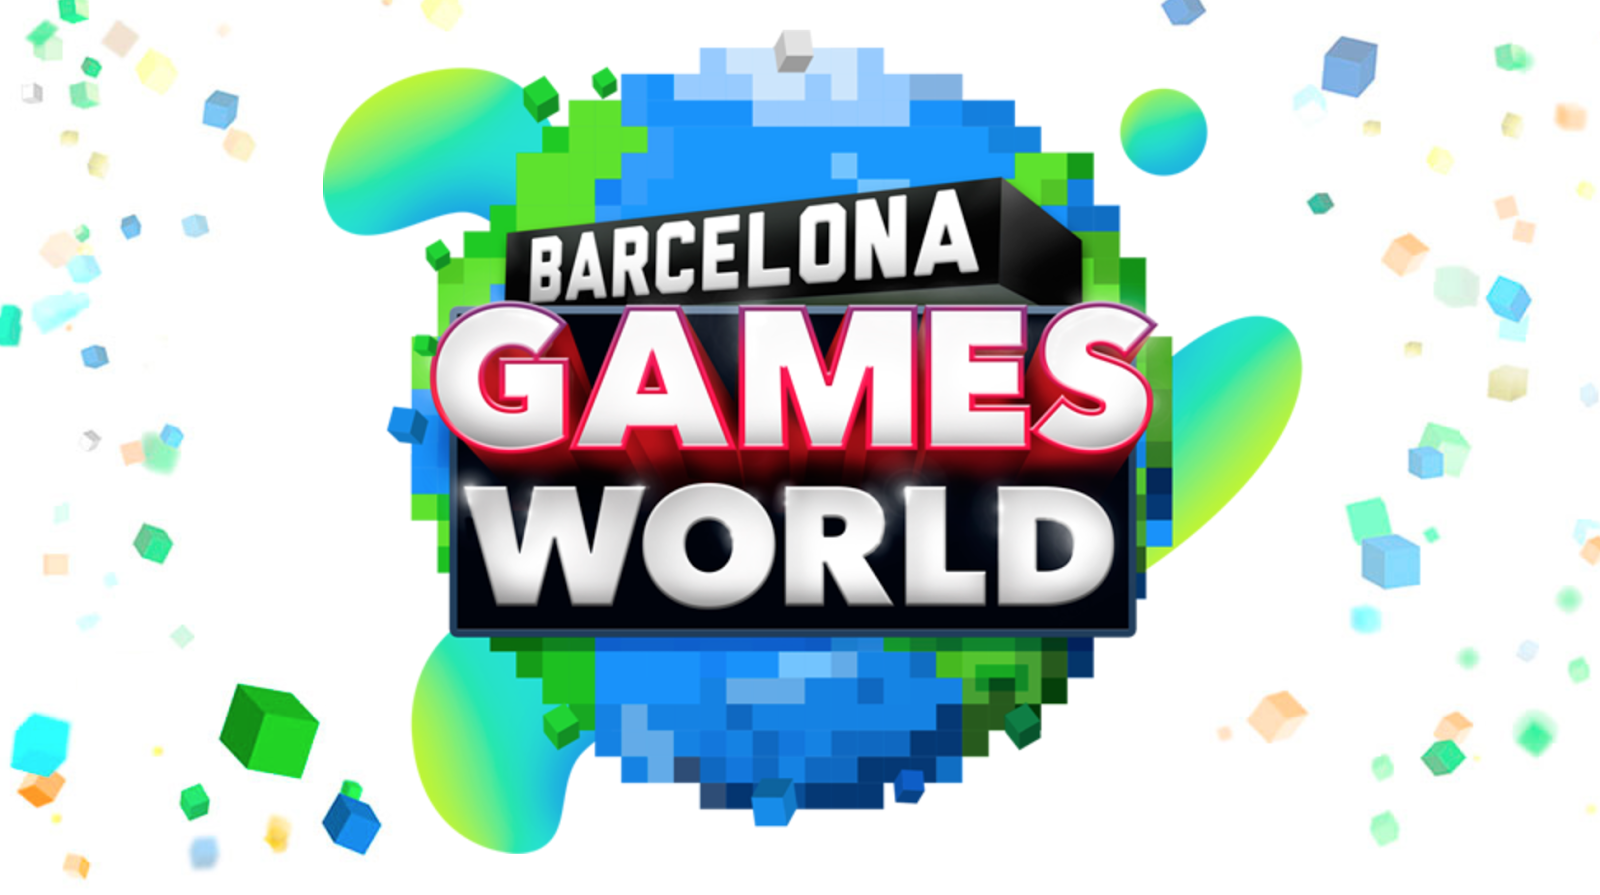 Barcelona Games World 2017